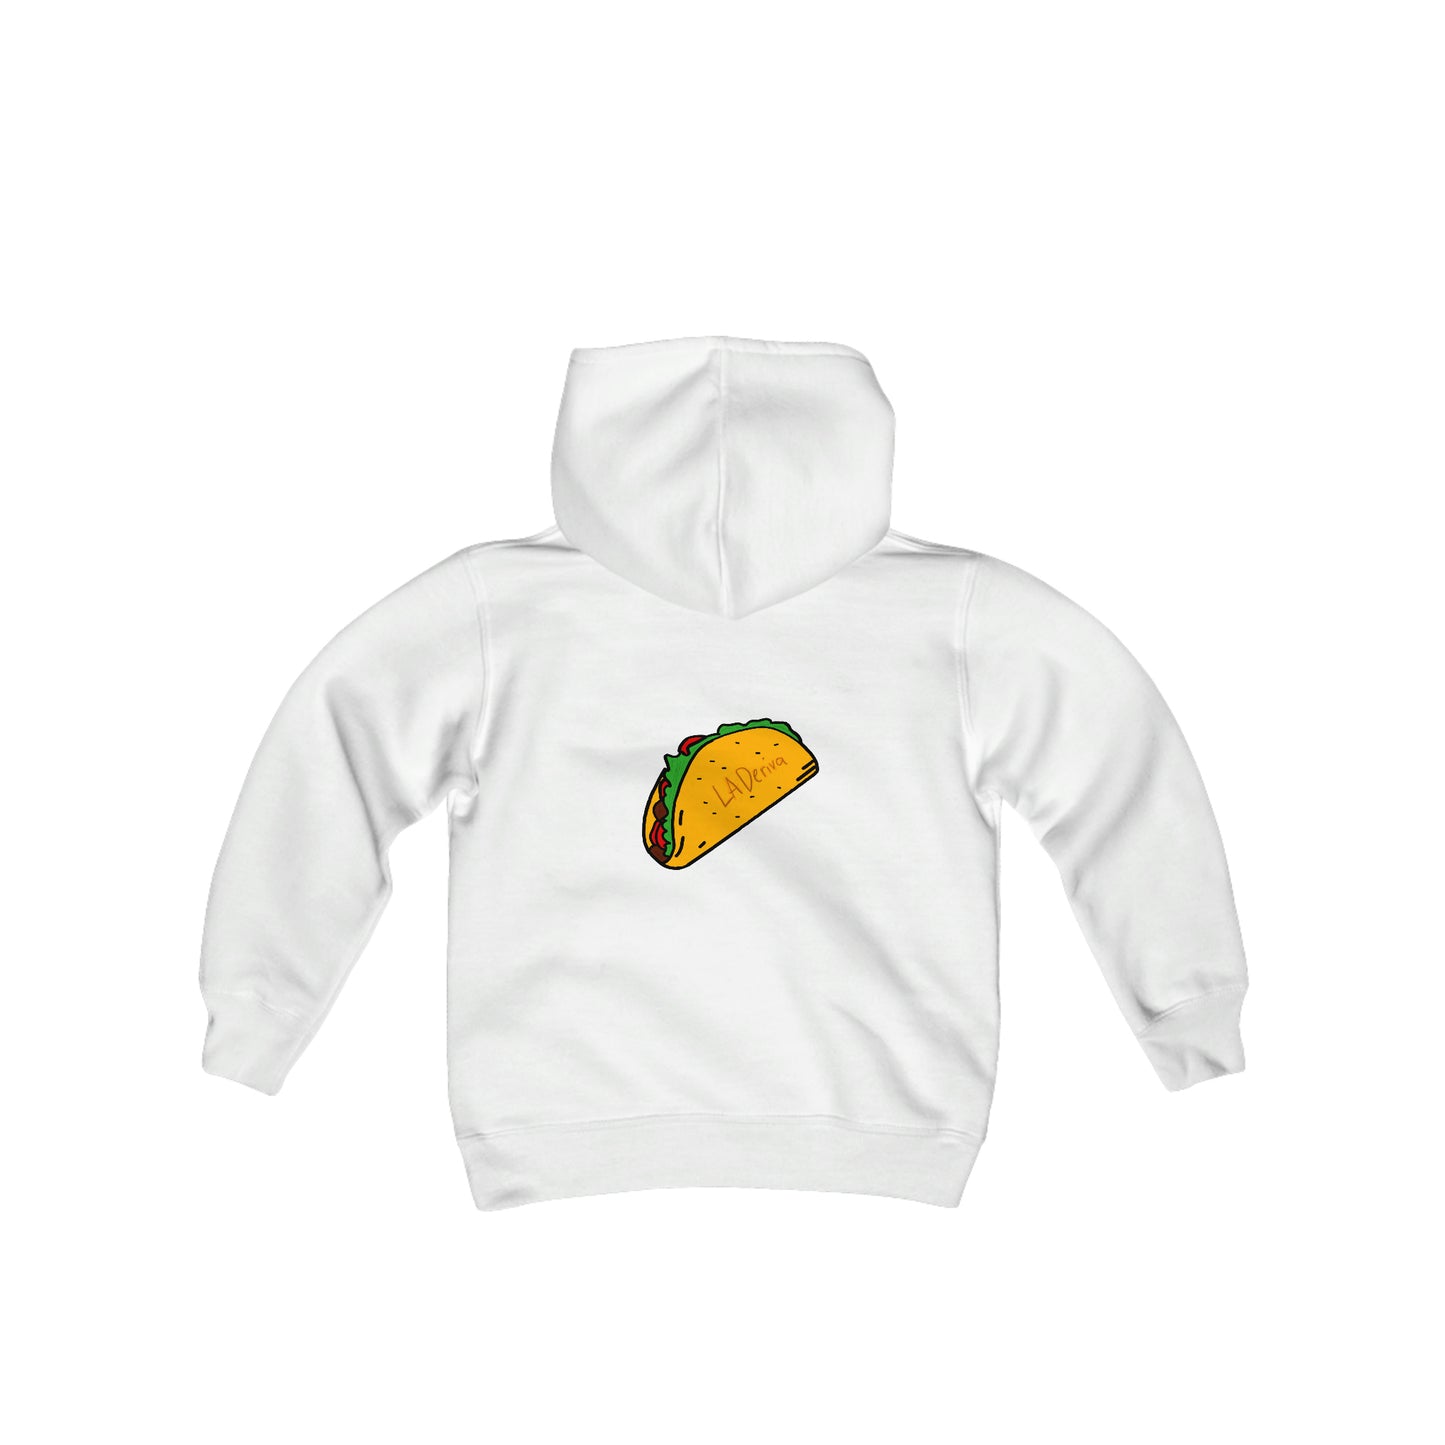 Youth Unisex La Deriva Taco hoodie